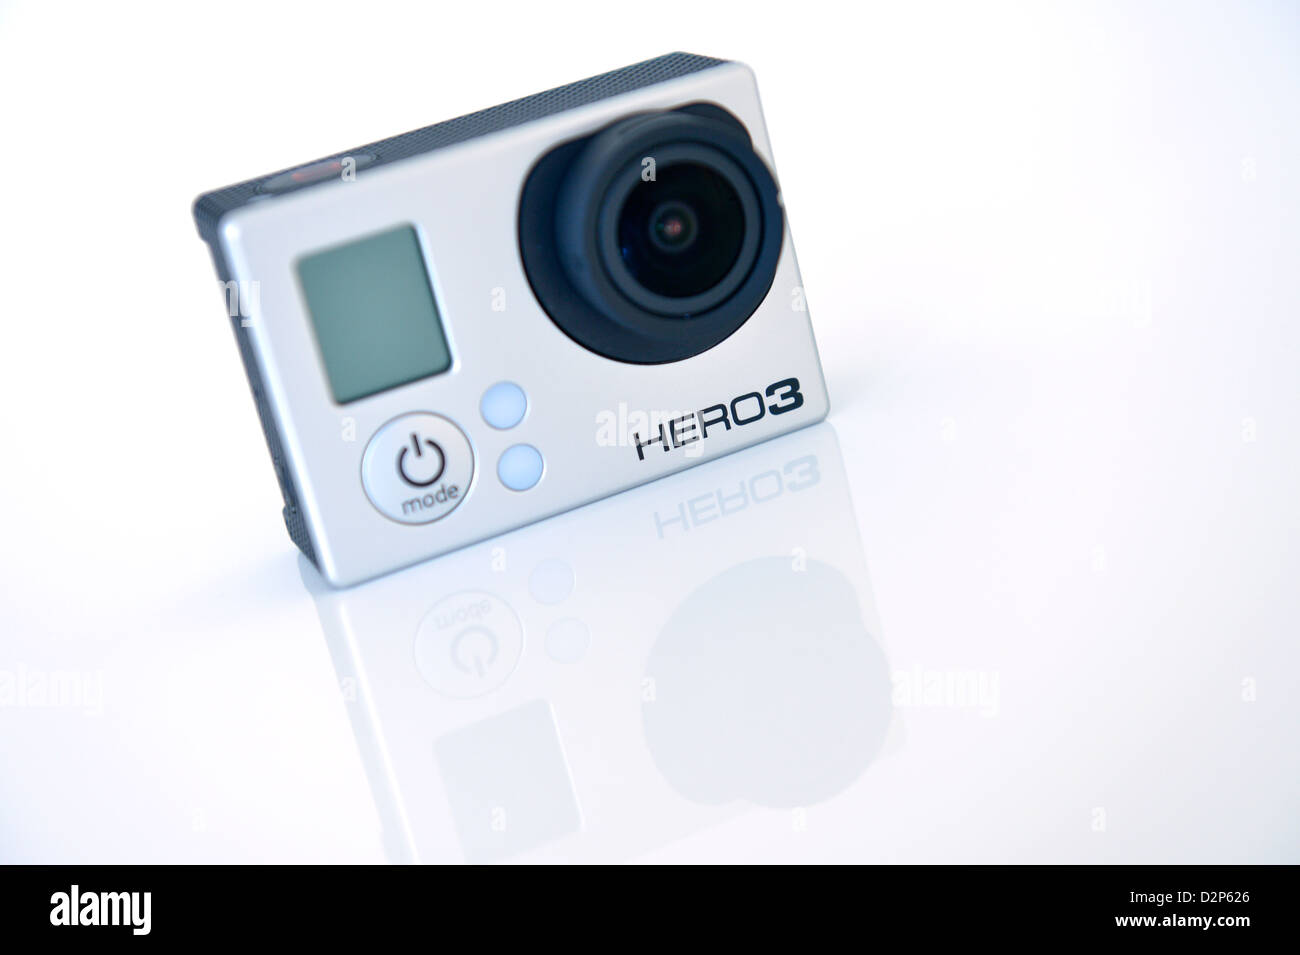 GoPro Hero 3 Black Edition camera Stock Photo